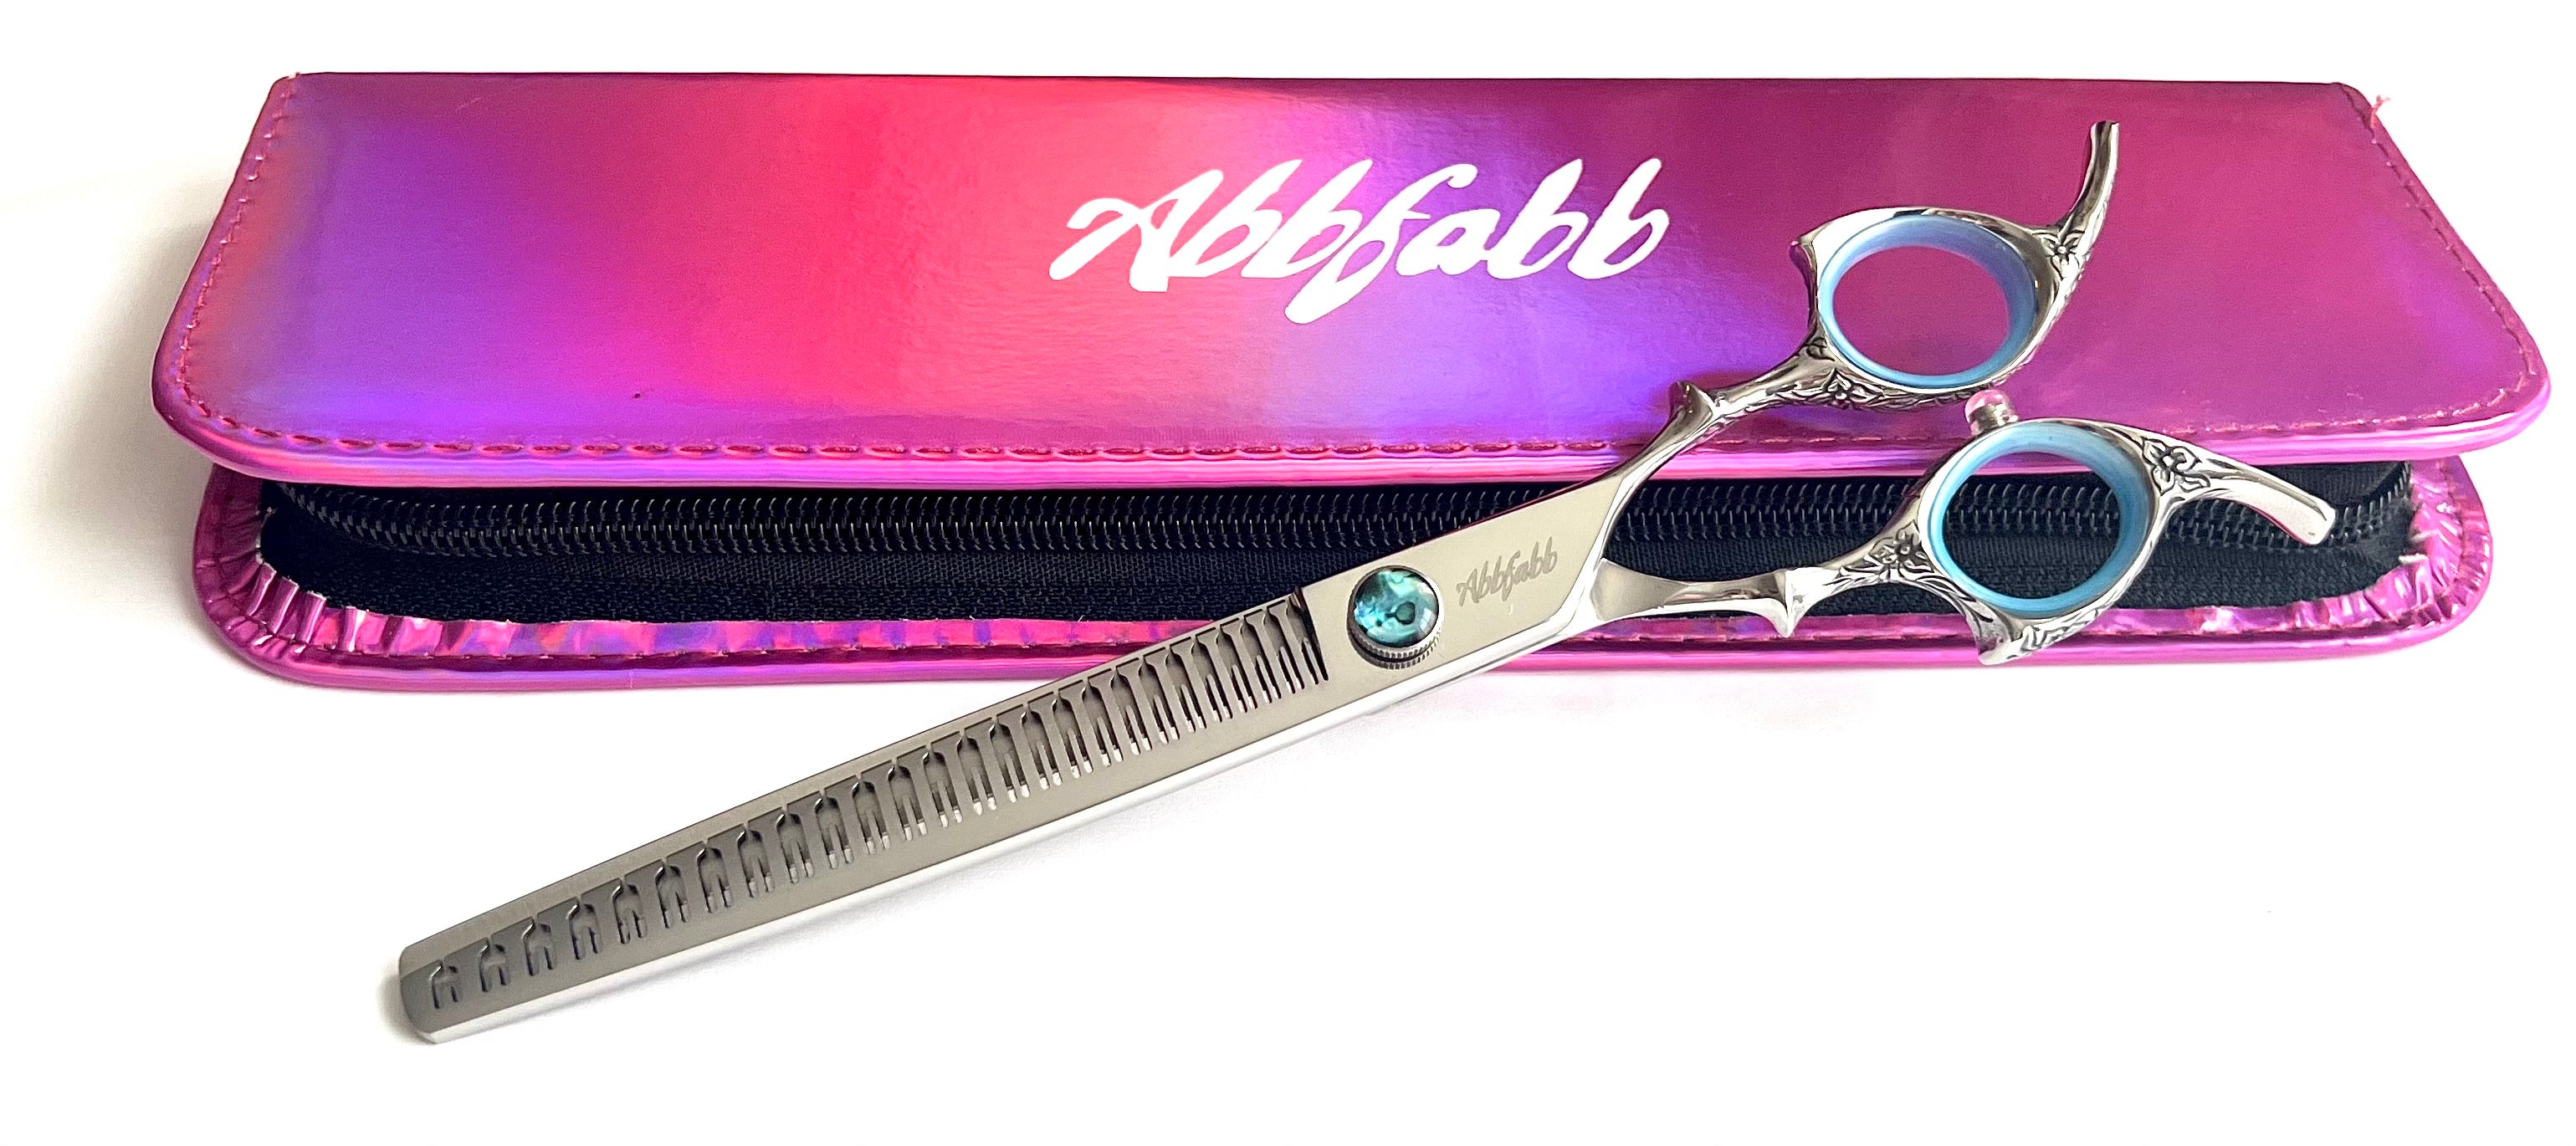 7" 26 Teeth Texturising Scissors-Chunkers by Abbfabb Grooming Scissors 